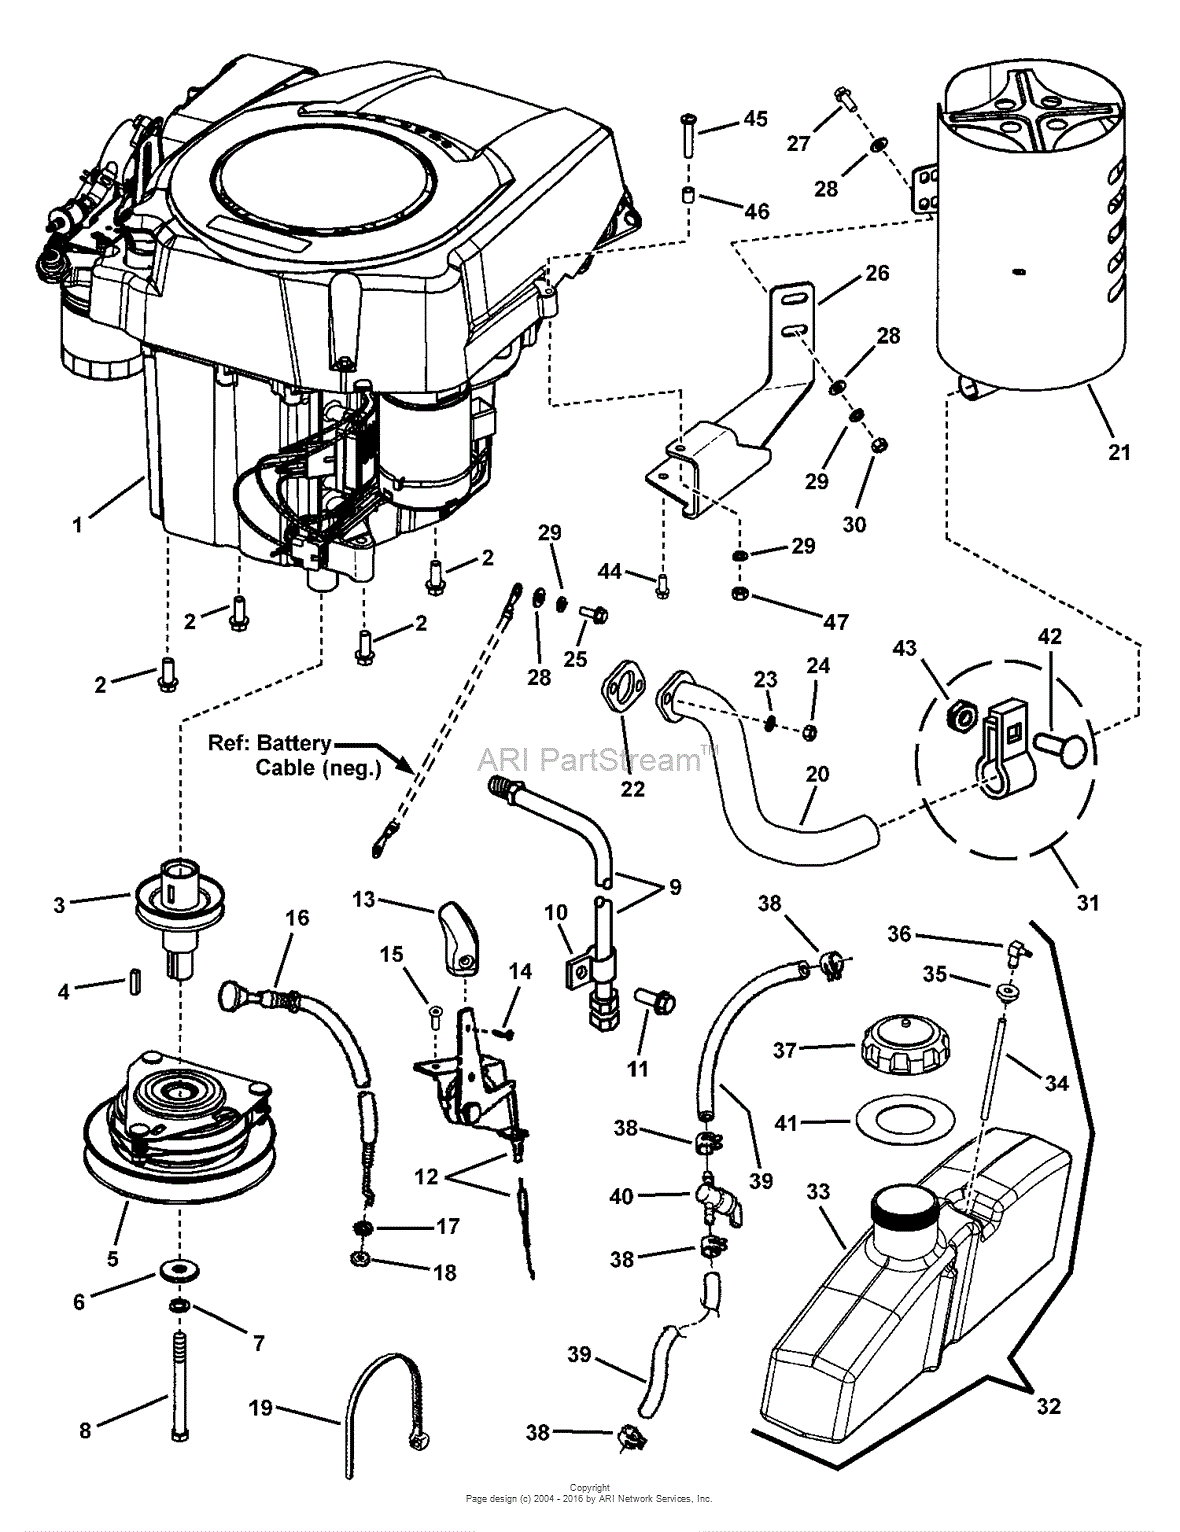 Kohler 27 Hp Engine Parts Diagram